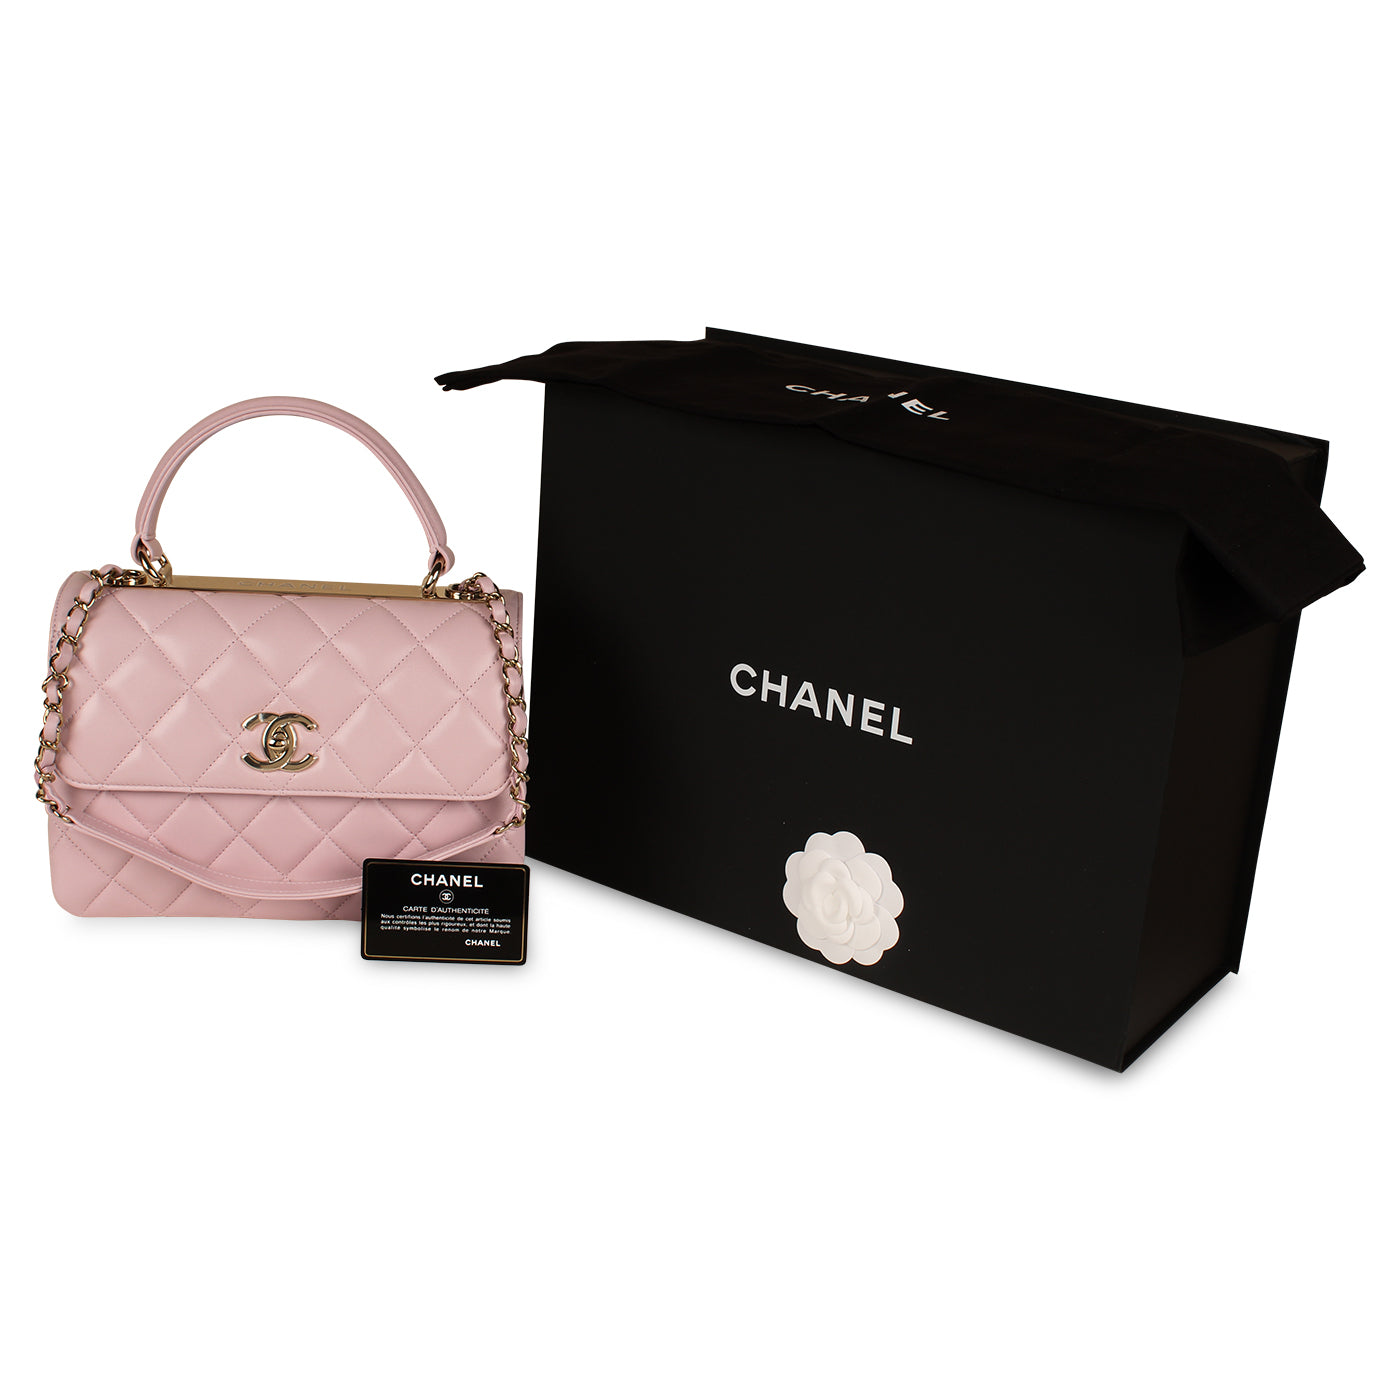 Chanel Trendy Cc FOR SALE! - PicClick UK